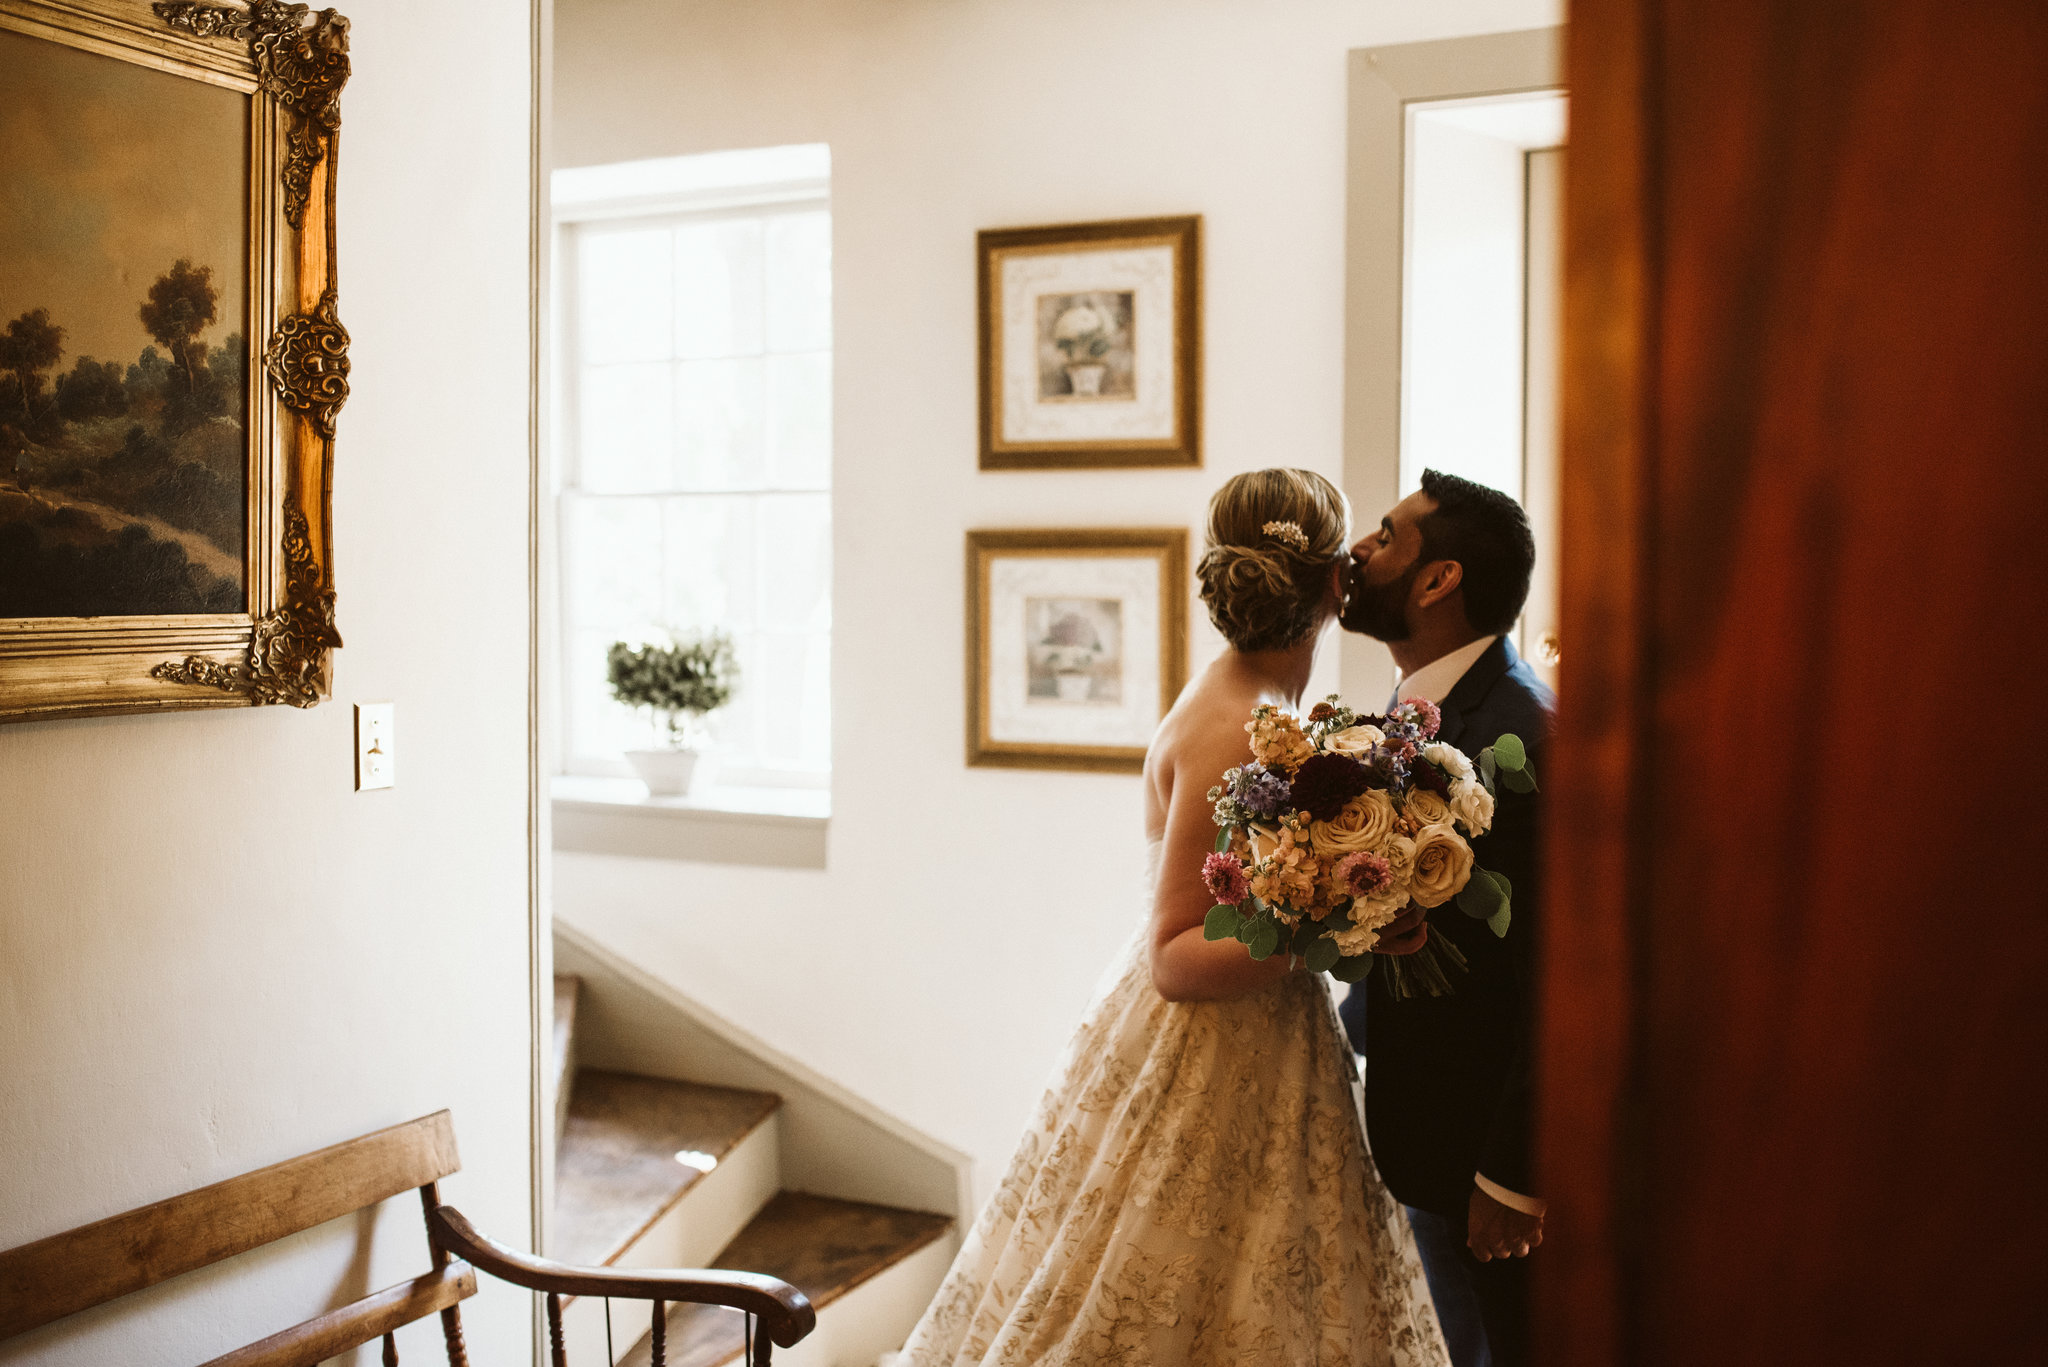  Ellicott City, Baltimore Wedding Photographer, Wayside Inn, Summer Wedding, Romantic, Traditional, Groom Kissing Bride on the Cheek, First Look, Fleur de Lis Flowers 